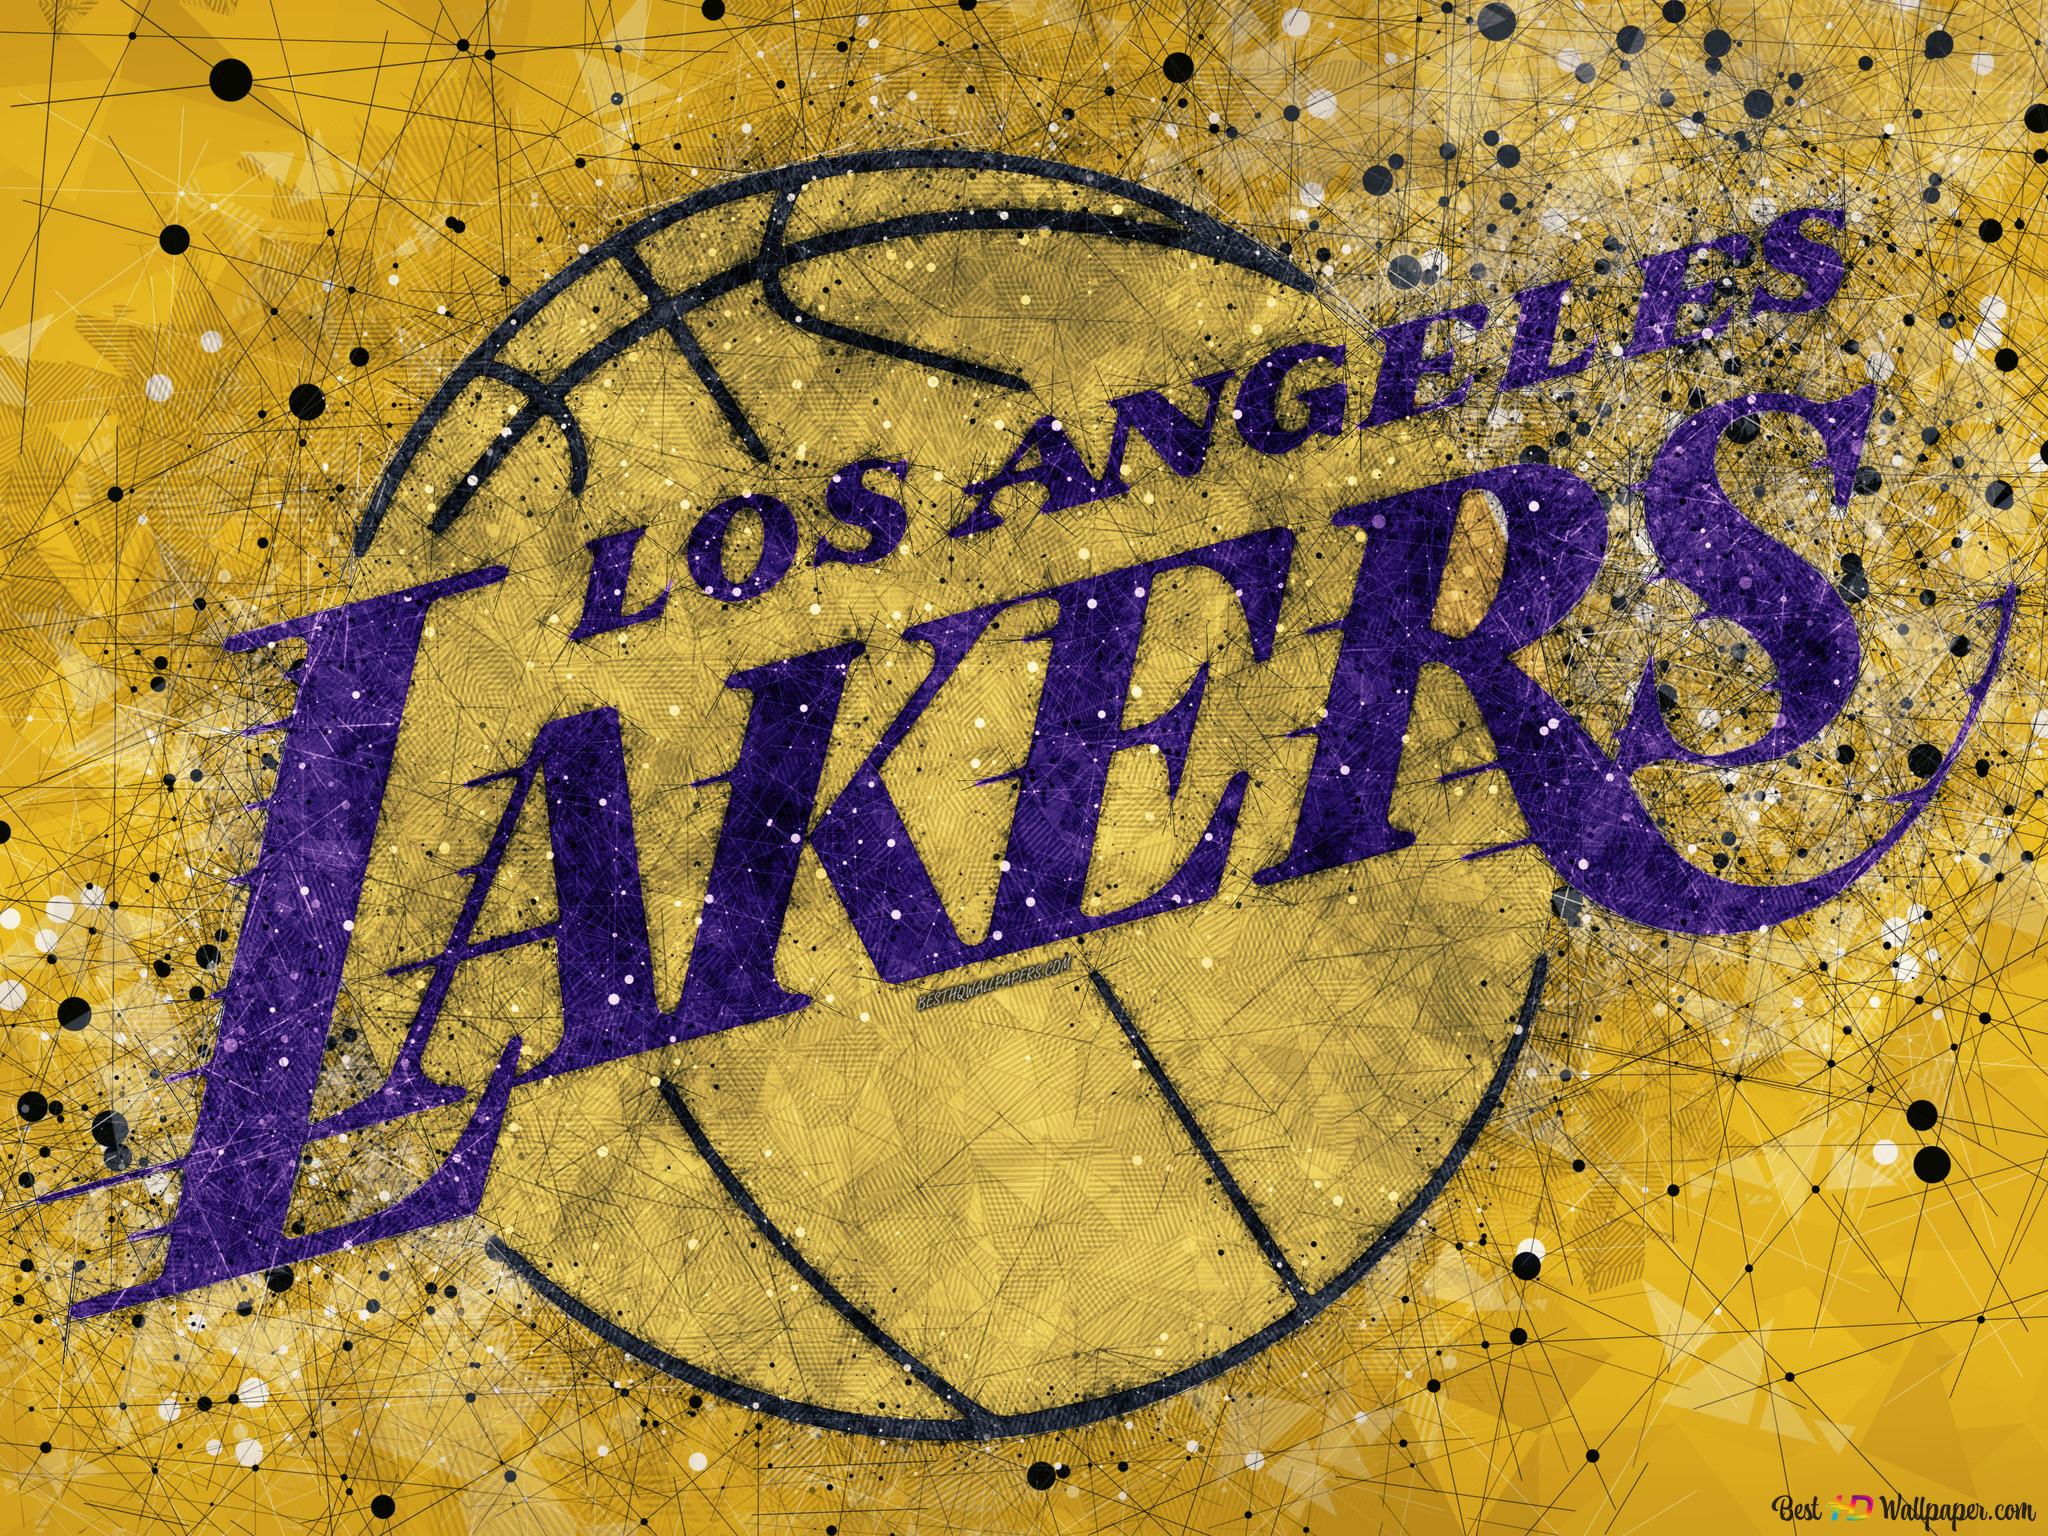 Los Angeles Lakers 4K wallpaper download